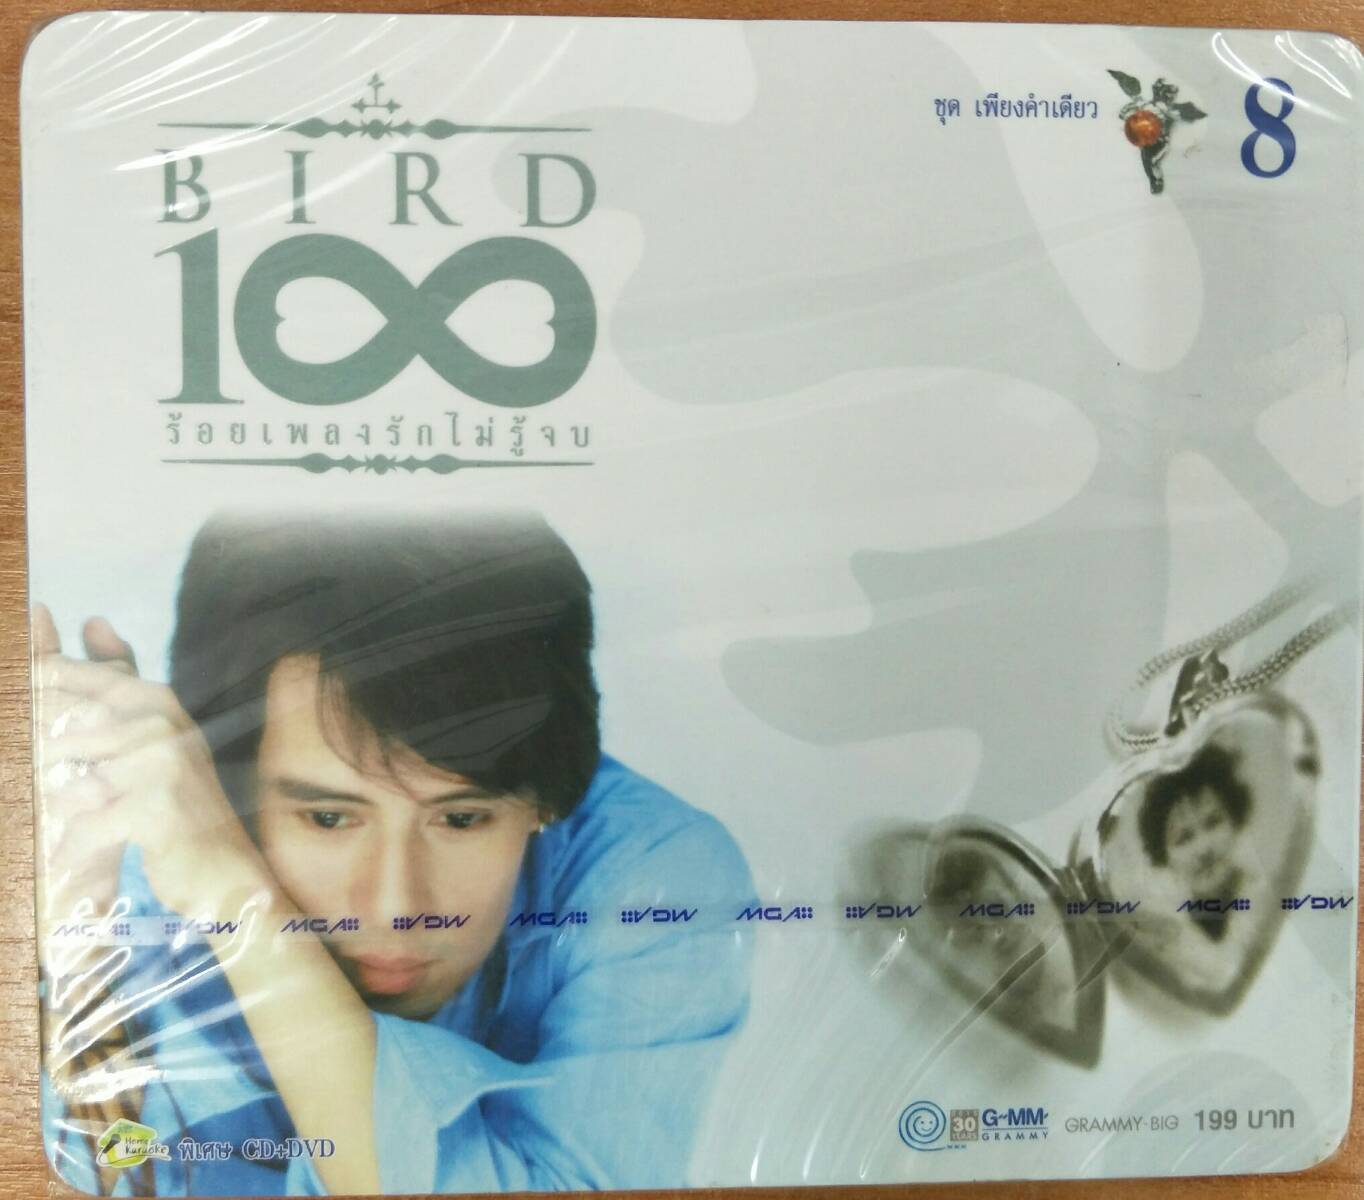 CD+DVD เบิร์ด BIRD 100 เพลงรักไม่รู้จบ ชุดเพียงคำเดียว Vol.8 (GMMCDDVD199-เบิร์ด 100 ชุดเพียงคำเดียวVol8) GG-0556156 เพียงคำเดียว ที่รัก หวงรัก ไกลชู้ แม่เนื้ออุ่น เพลง เพลงไทย เบิร์ด ธงไชย แกรมมี่ ซีดี ดีวดี STARMART